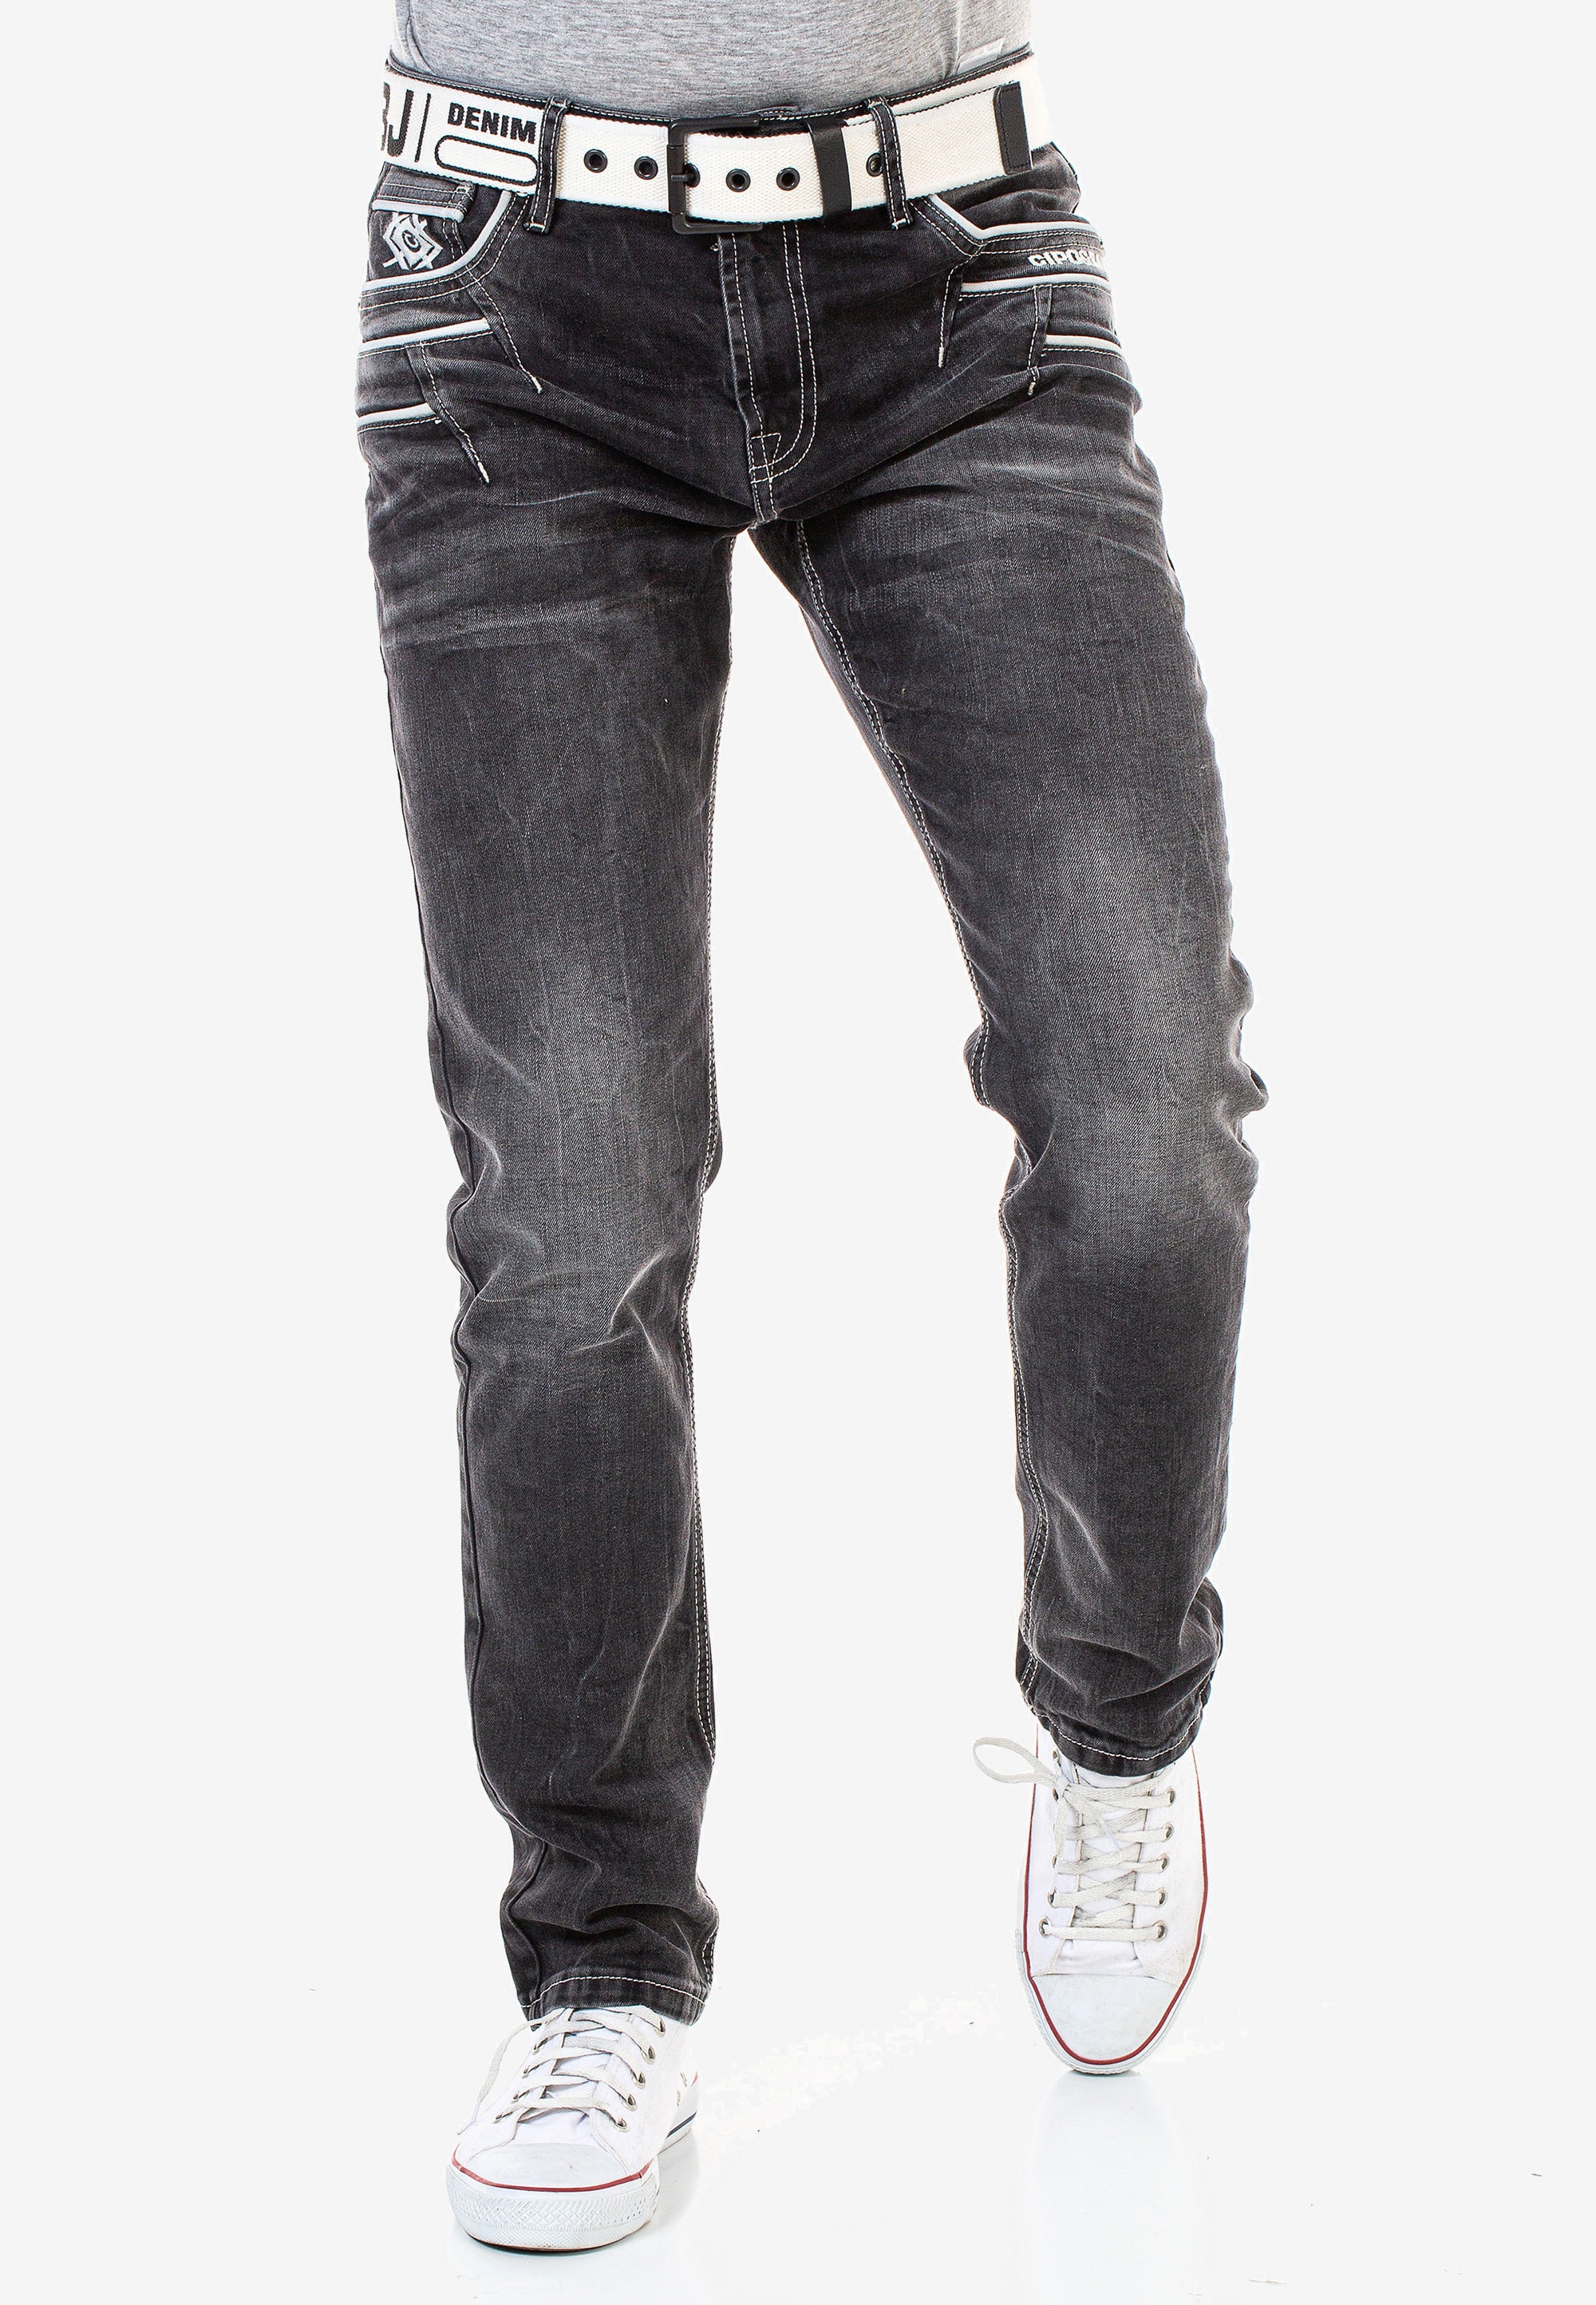 Bequeme Jeans, mit Kontrastnähten